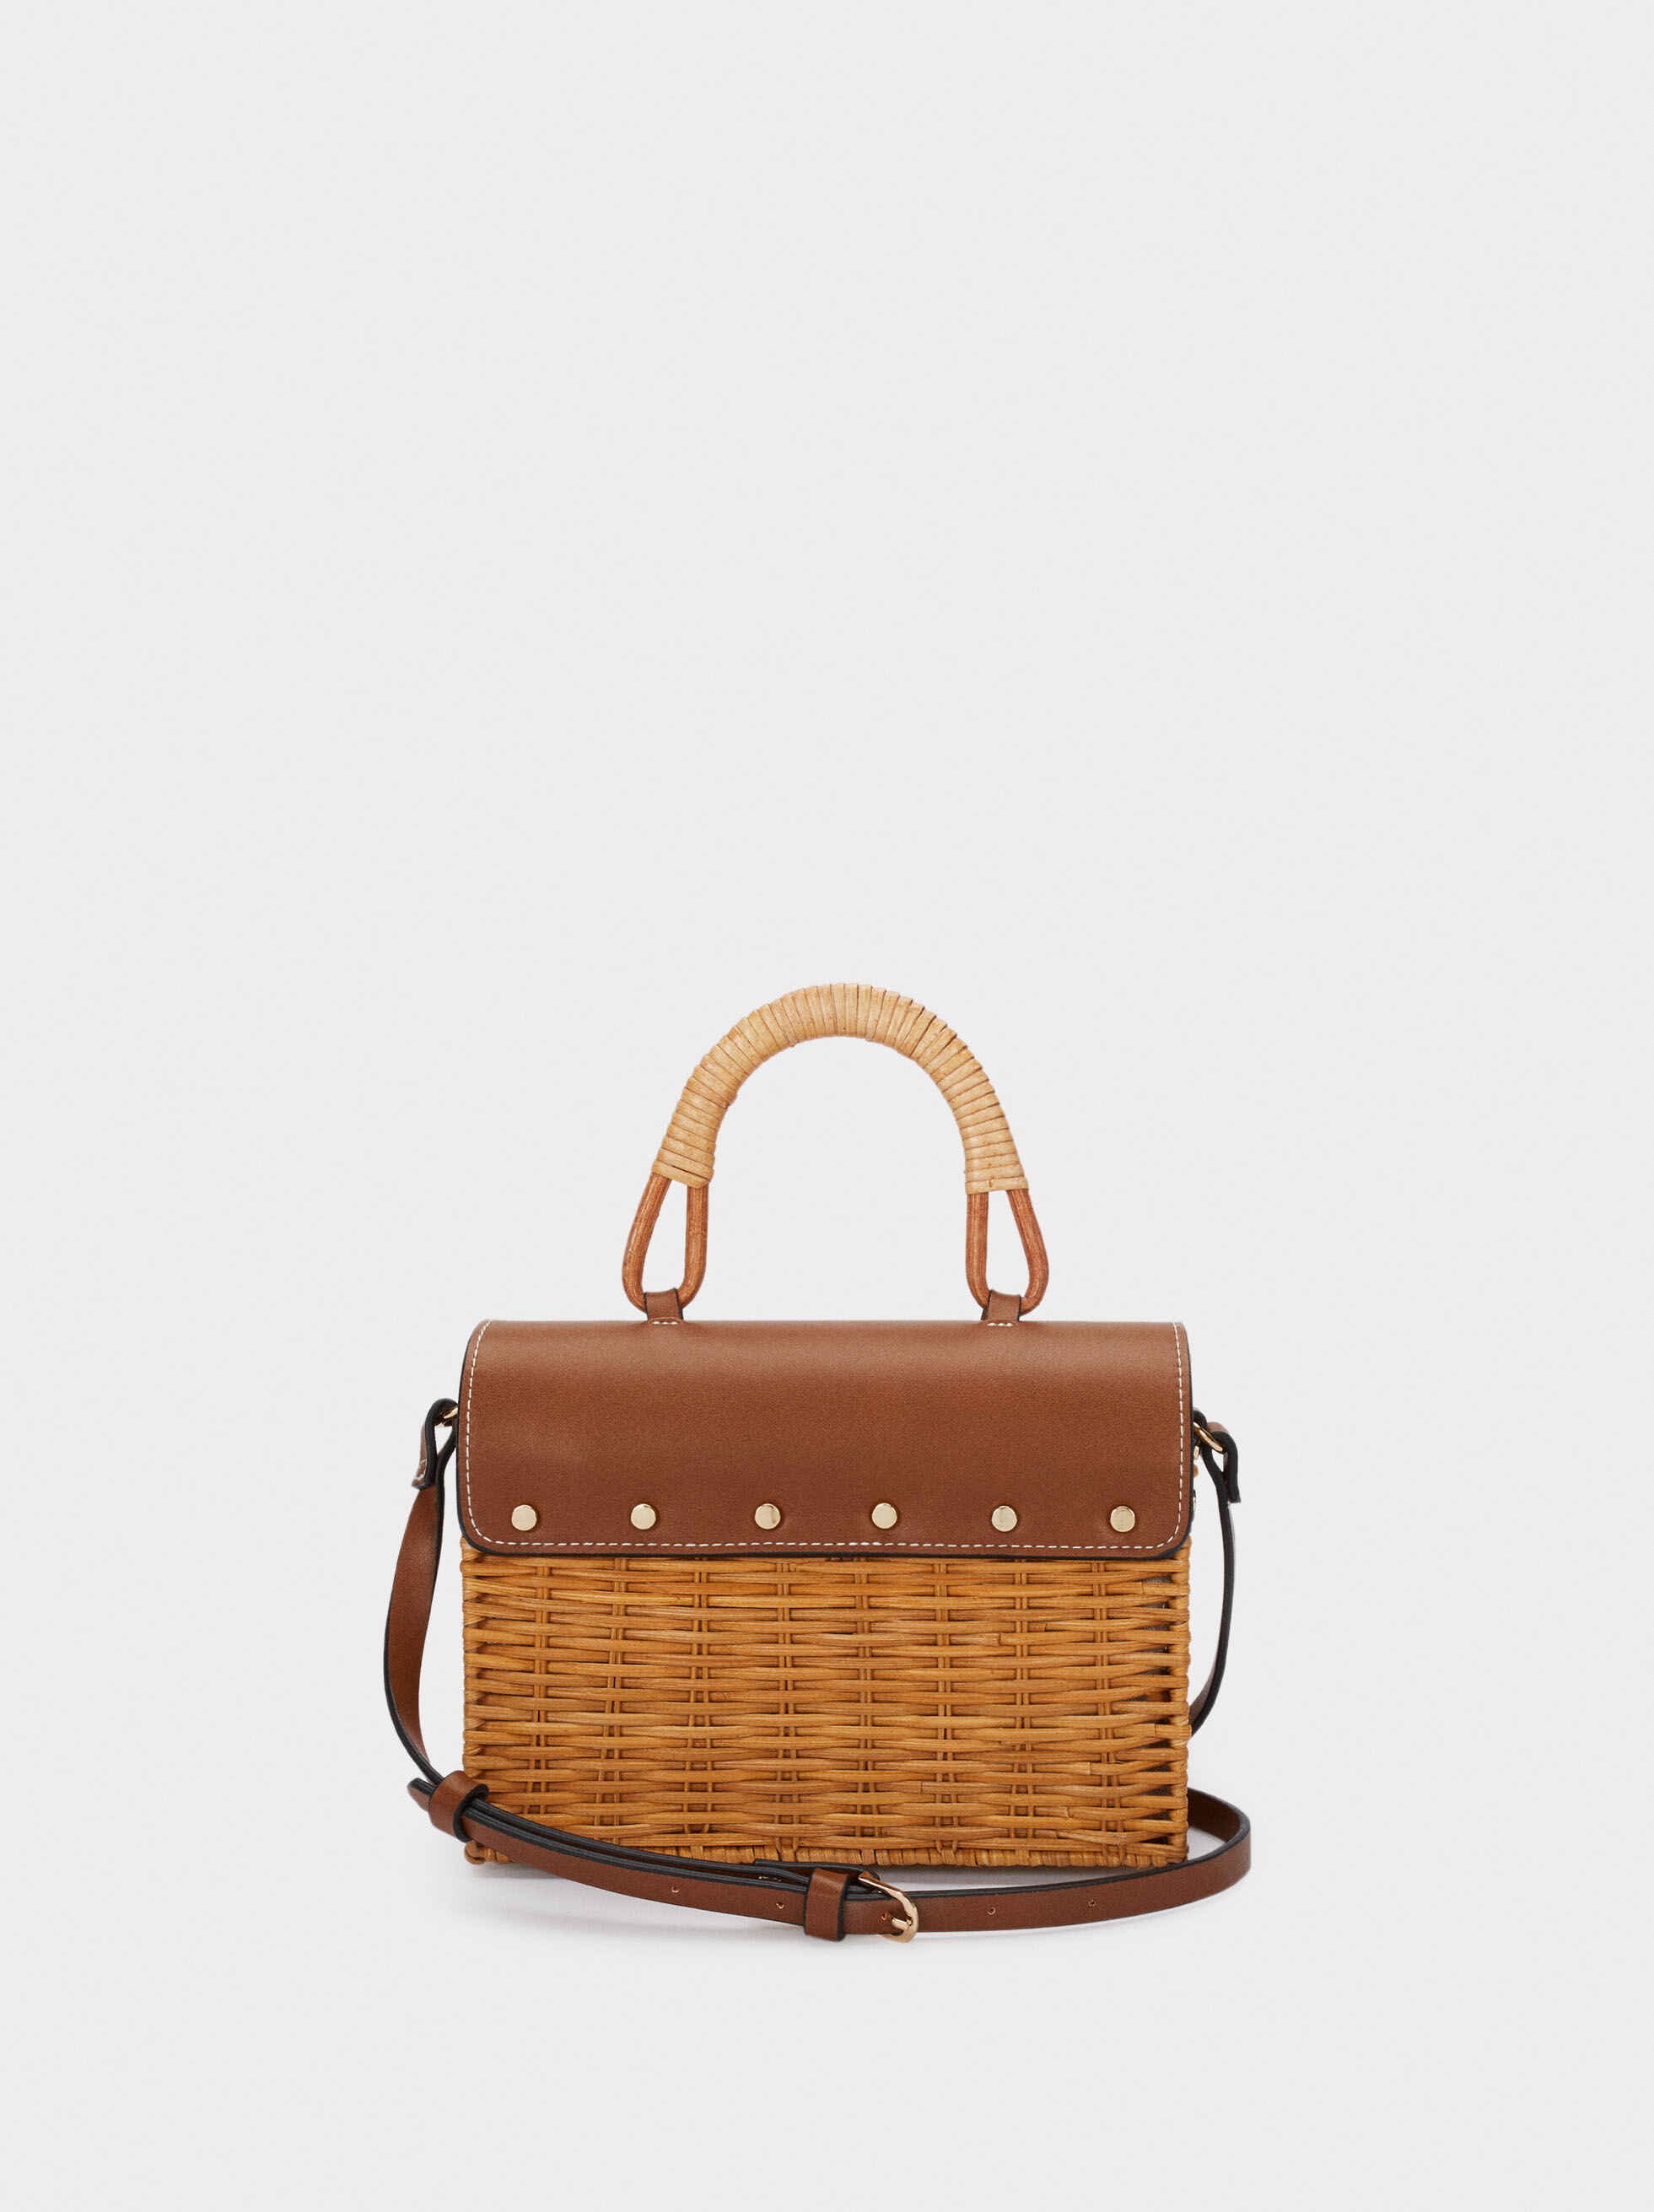 Combined Woven Tote Bag - Camel - Woman - Handbags - parfois.com